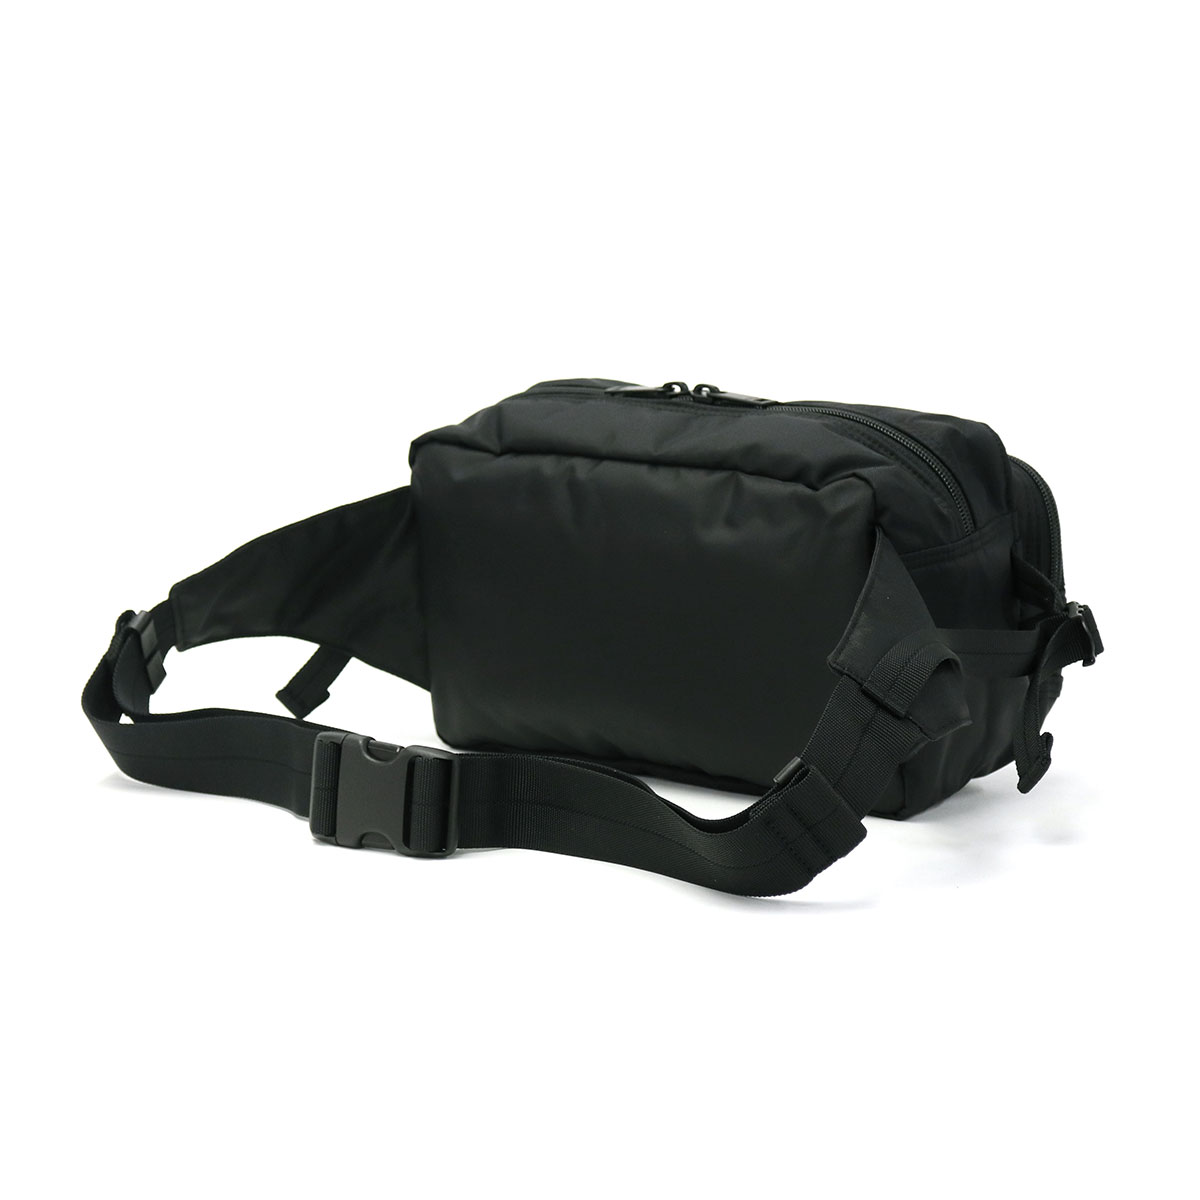 Yoshida Bag PORTER FLASH WAIST BODY BAG (L) Black 689-05952 MADE IN JAPAN  New